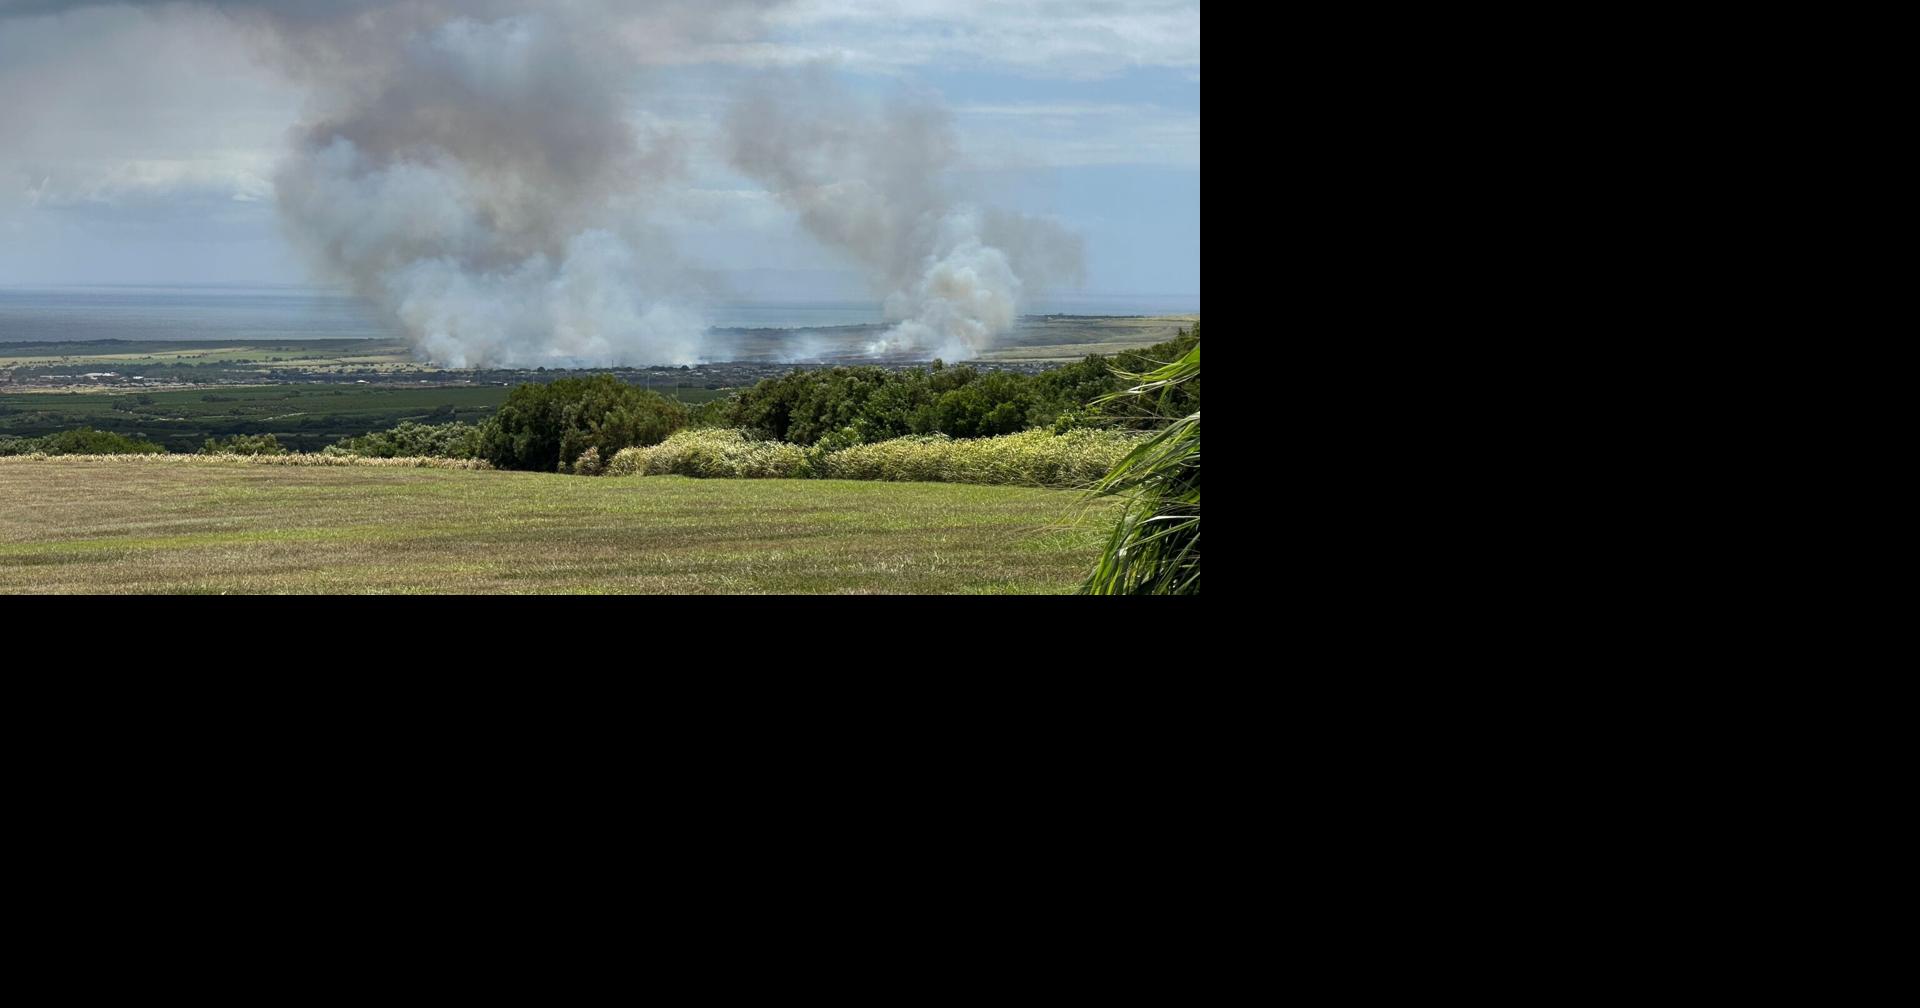 Kaumakani residents urged to evacuate as brush fire grows near Hanapepe on Kauai